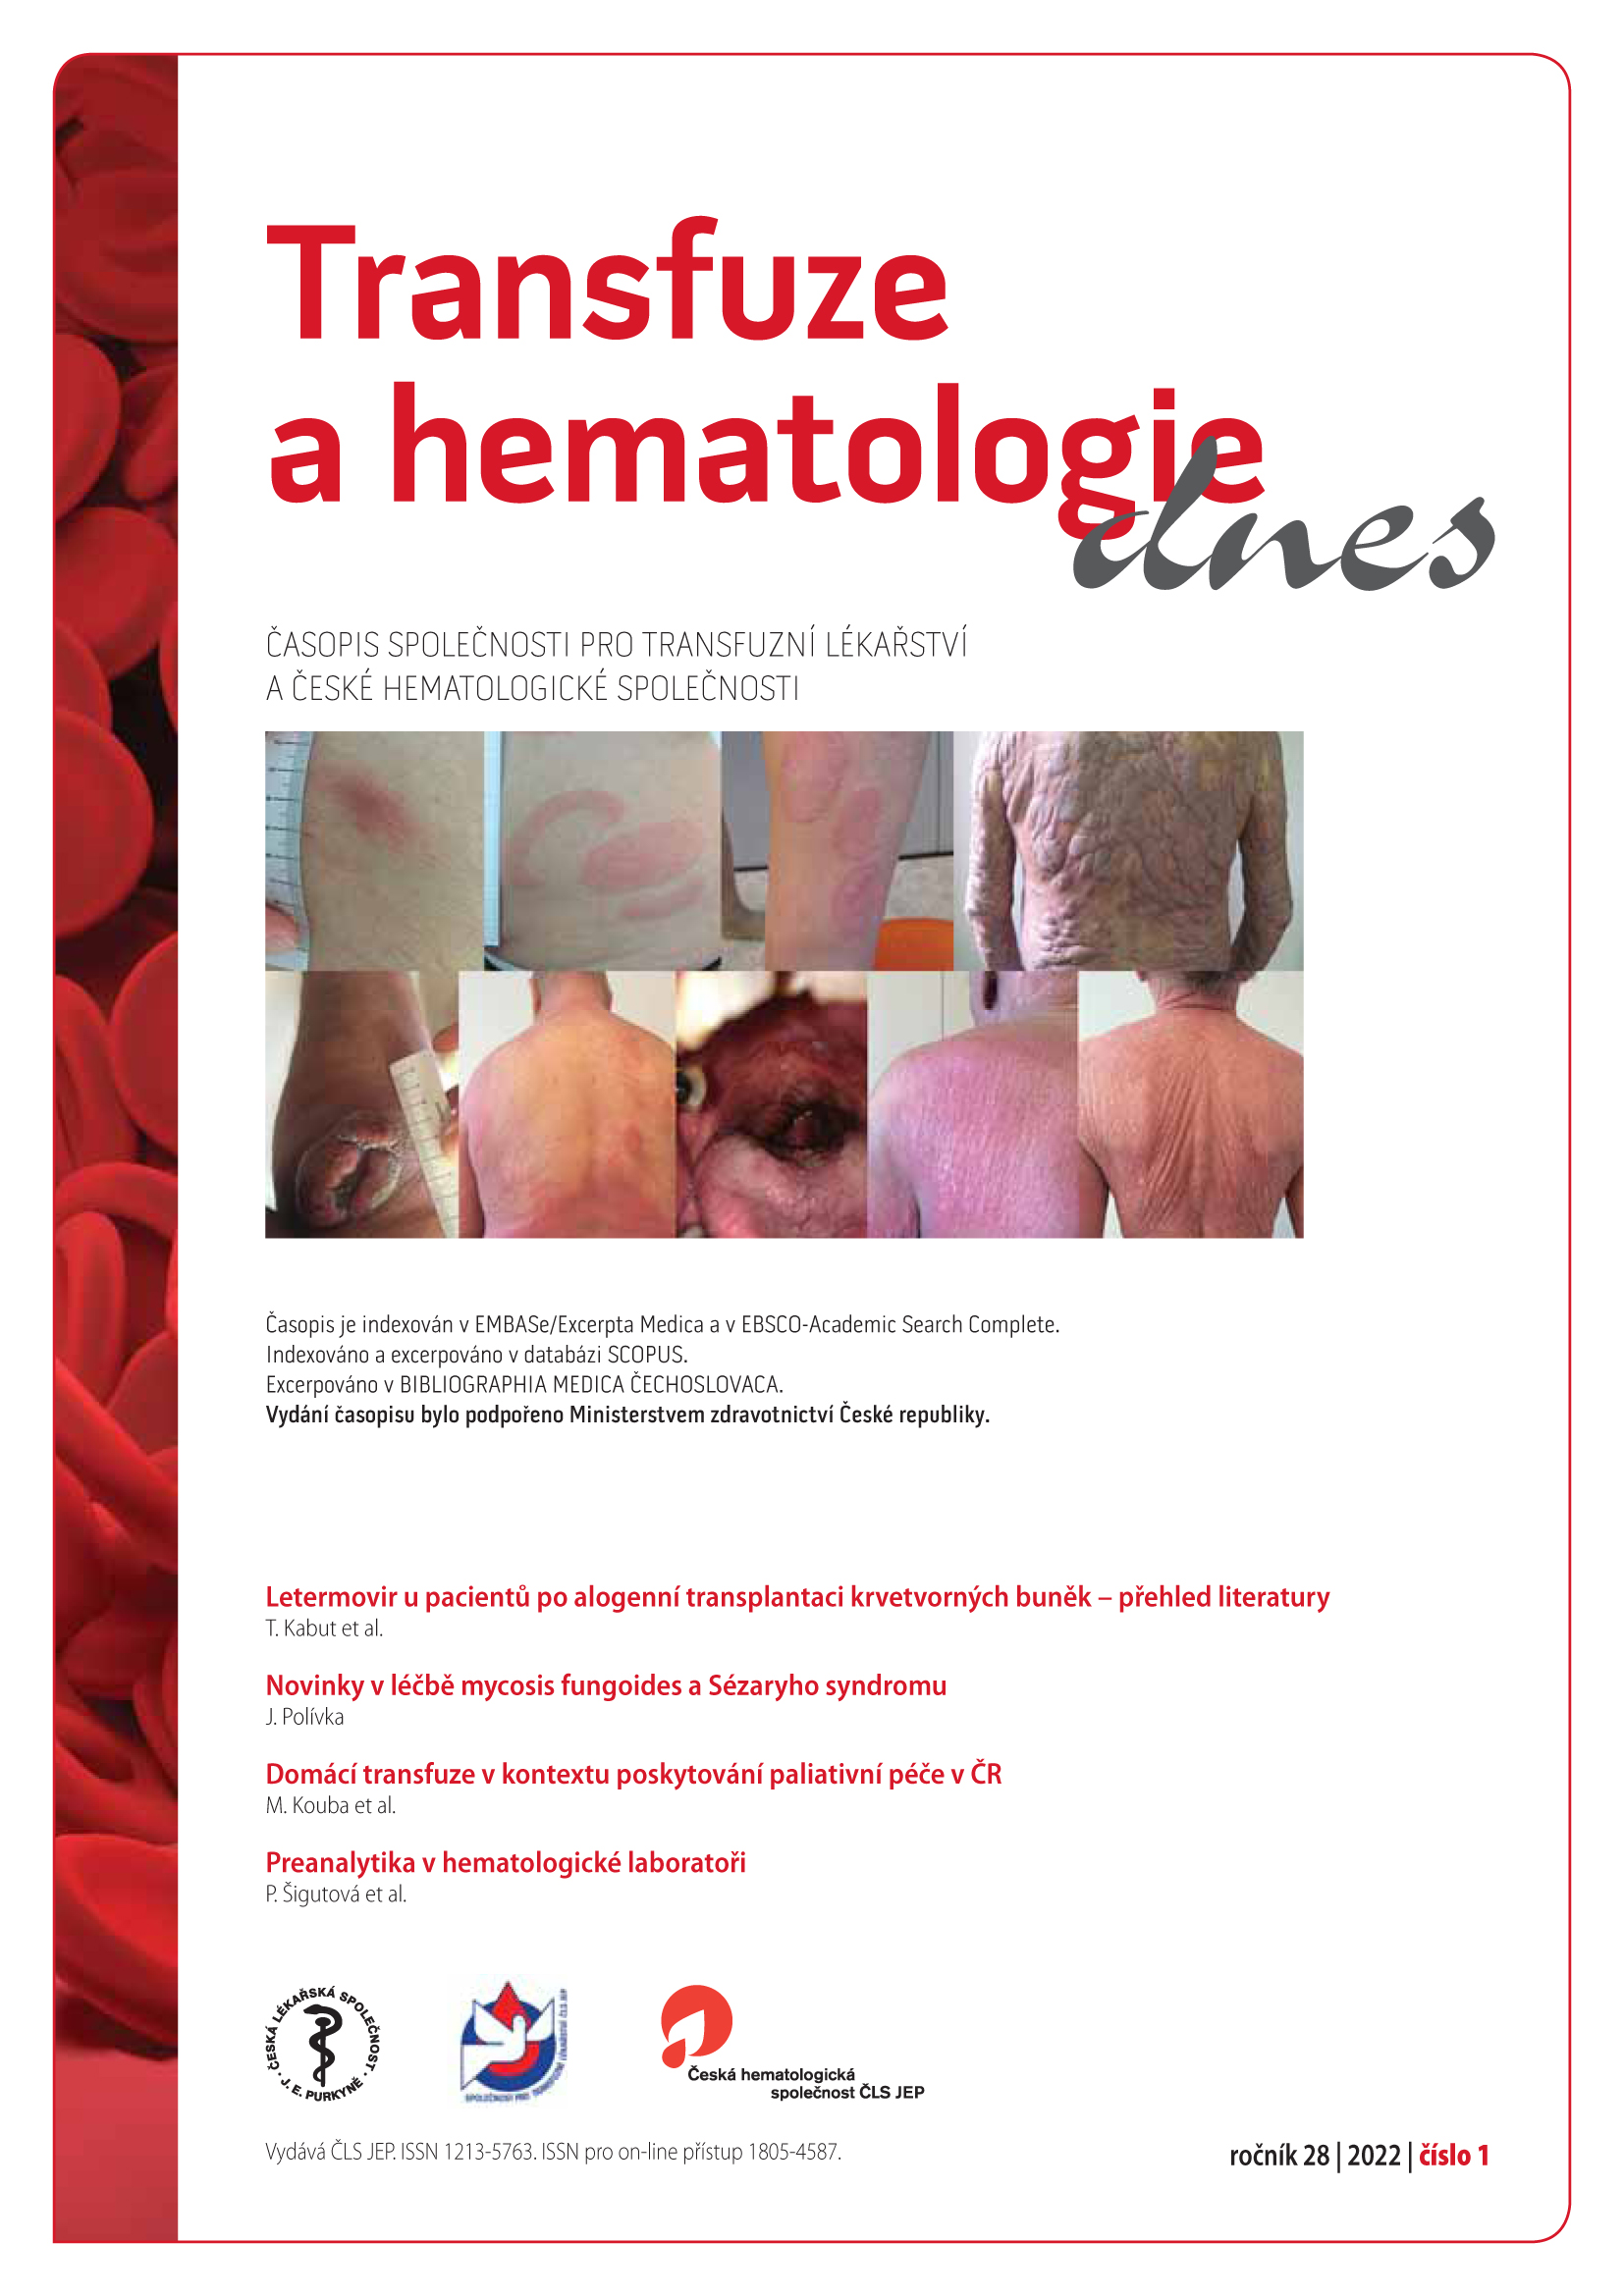 					Náhled Vol 28 No 1 (2022): Transfuze a hematologie dnes
				